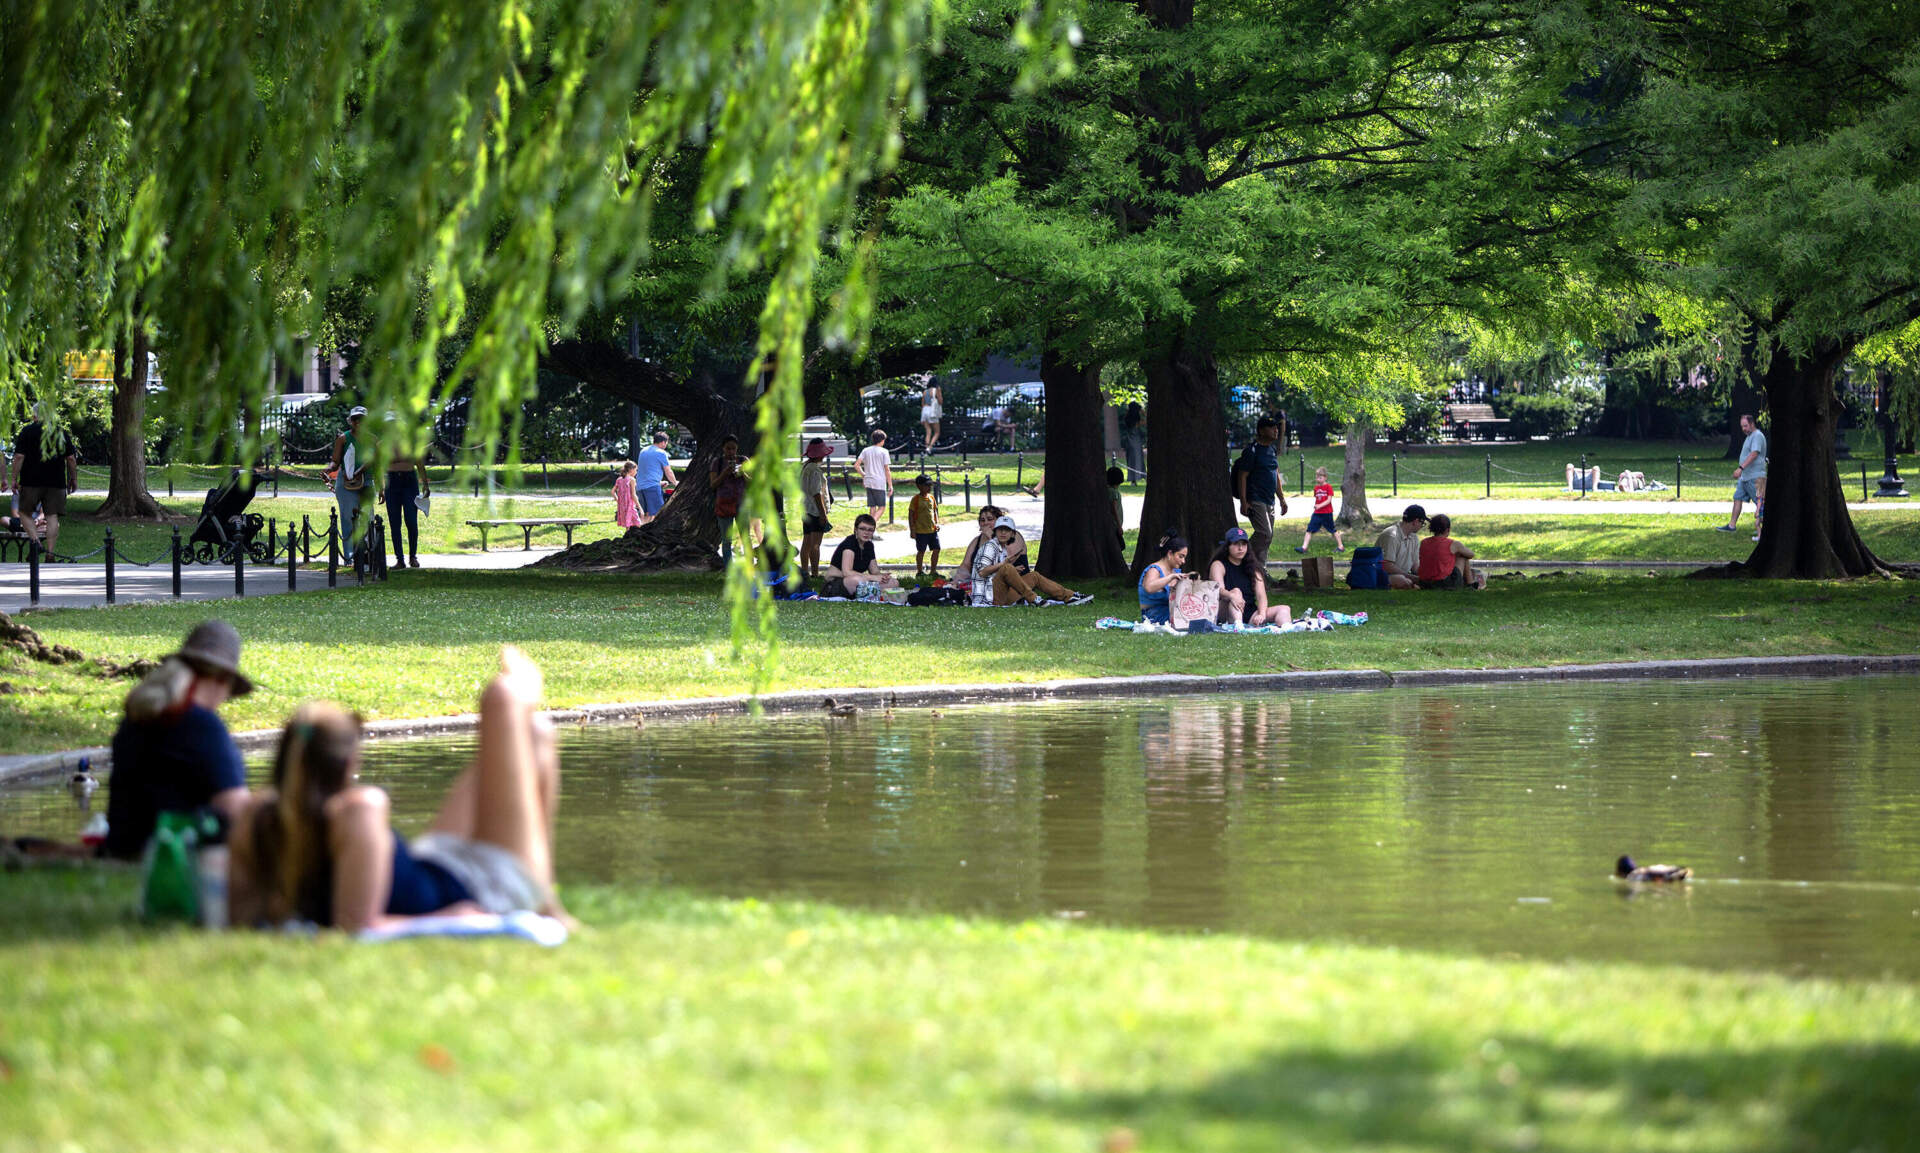 Sheltering in shade, people picnic by the lake in Boston's Public Garden. (Robin Lubbock/WBUR)